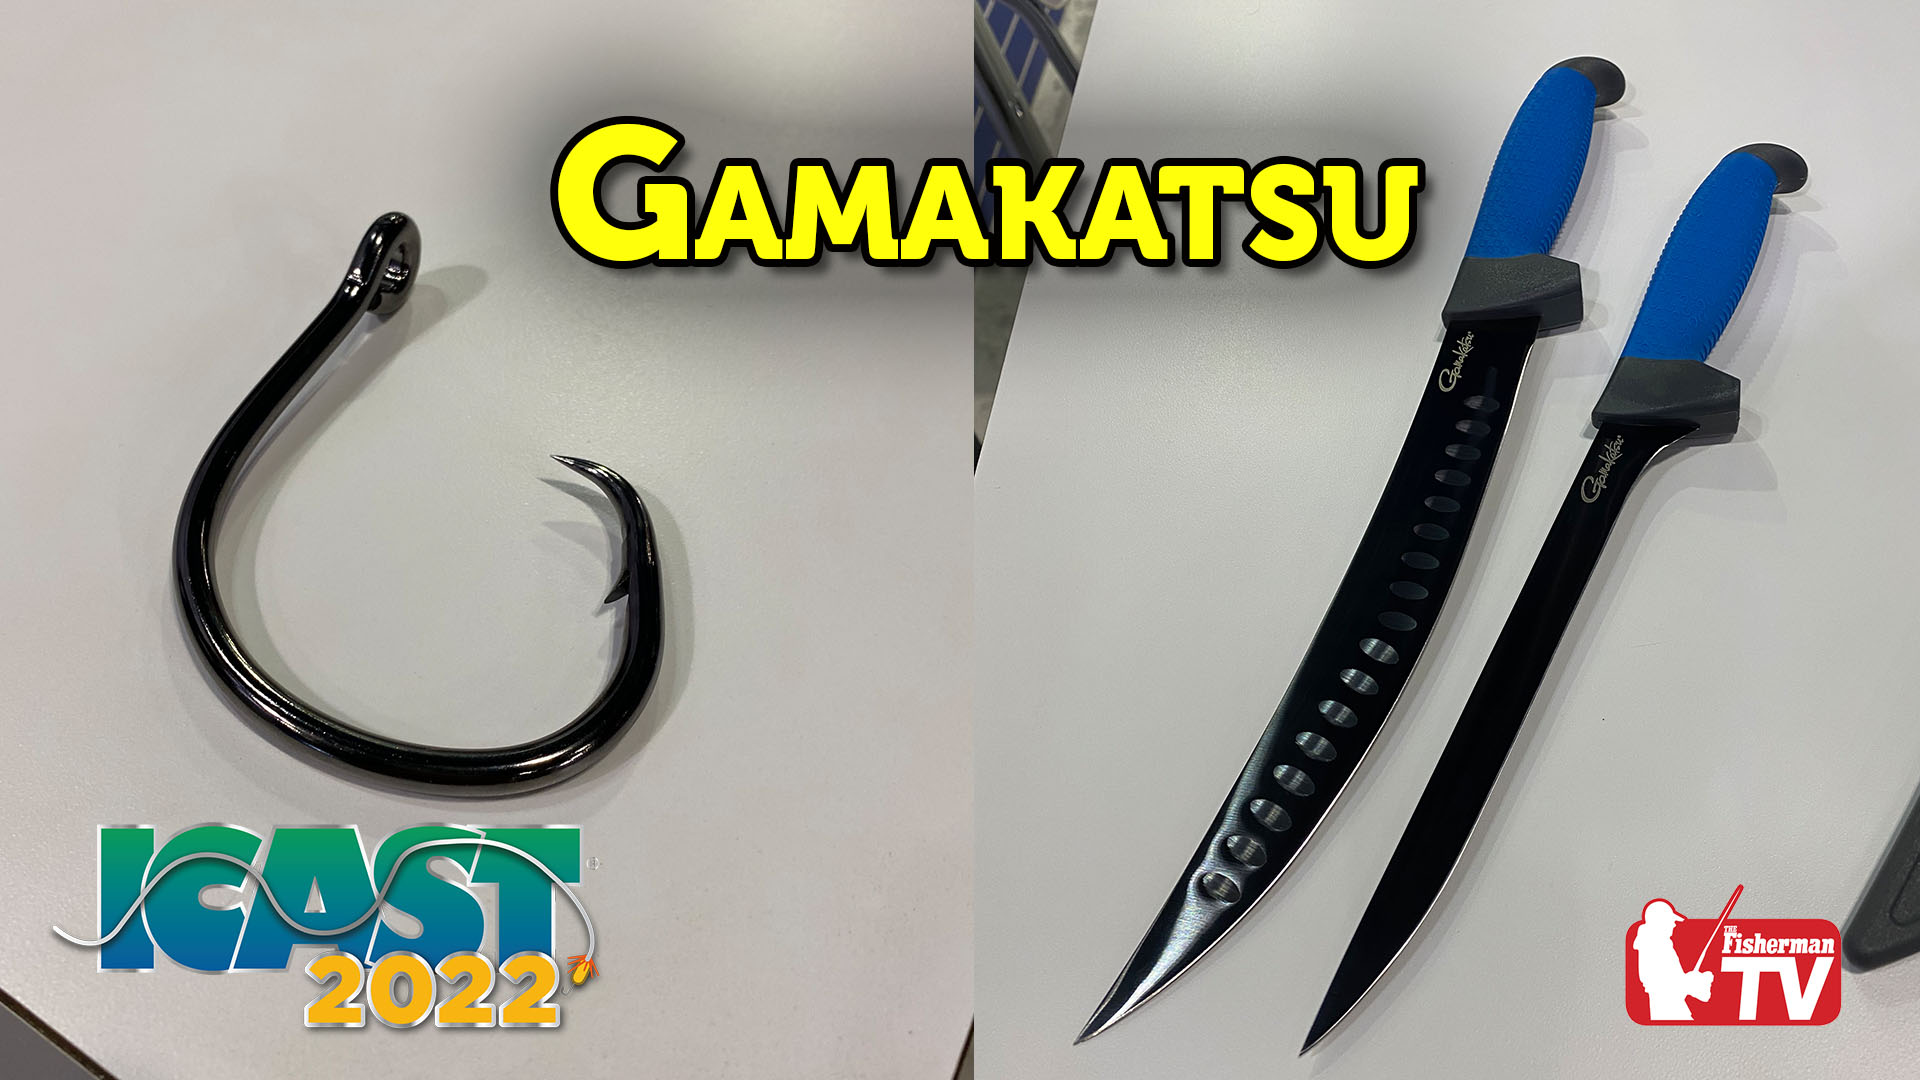 The Fisherman's “New Product Spotlight” – Gamakatsu Filet Knife - The  Fisherman